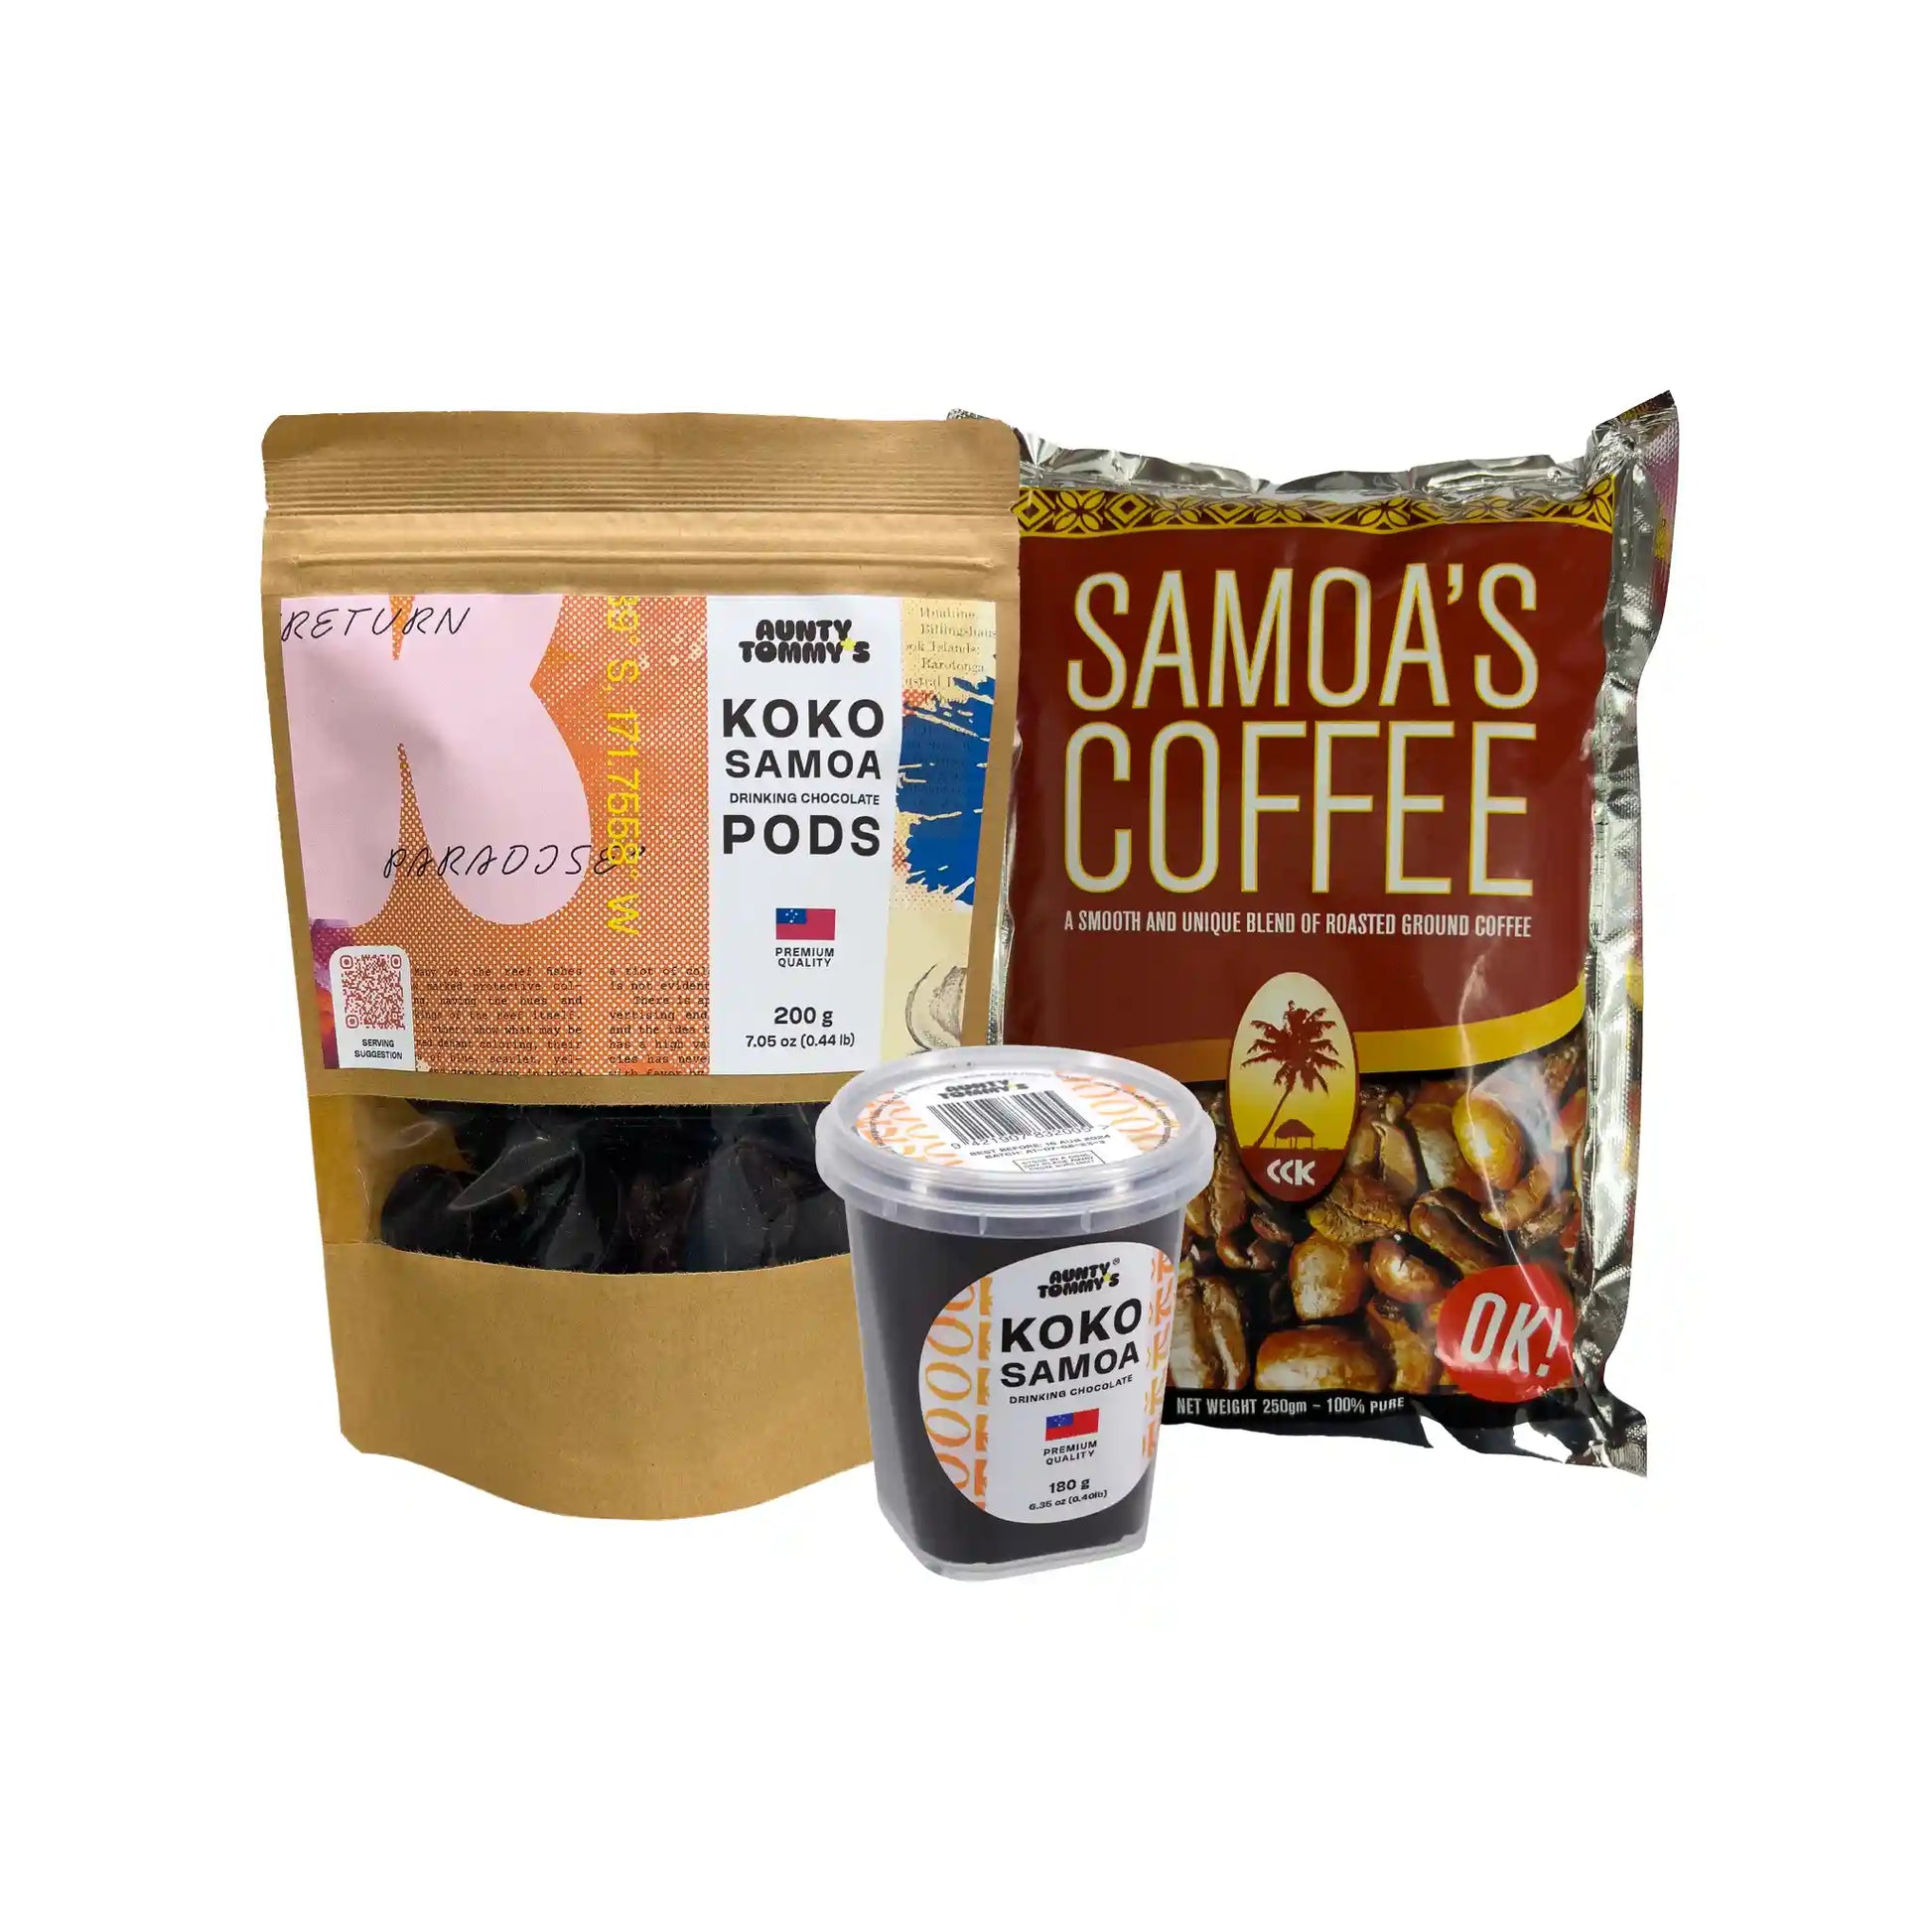 Kofe and Koko Samoa Bundle